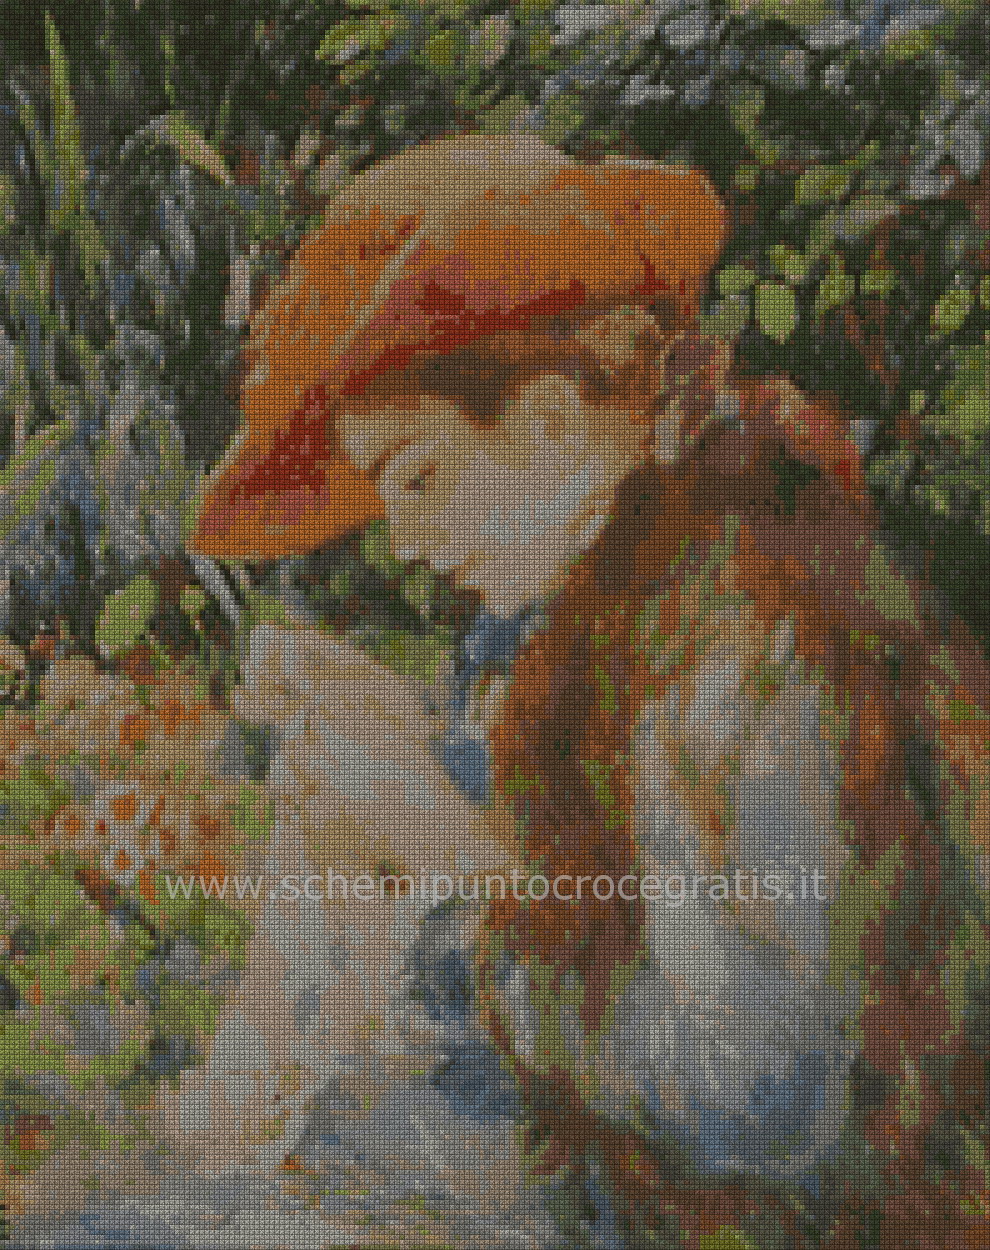 pittori_moderni/renoir/Renoir06.jpg